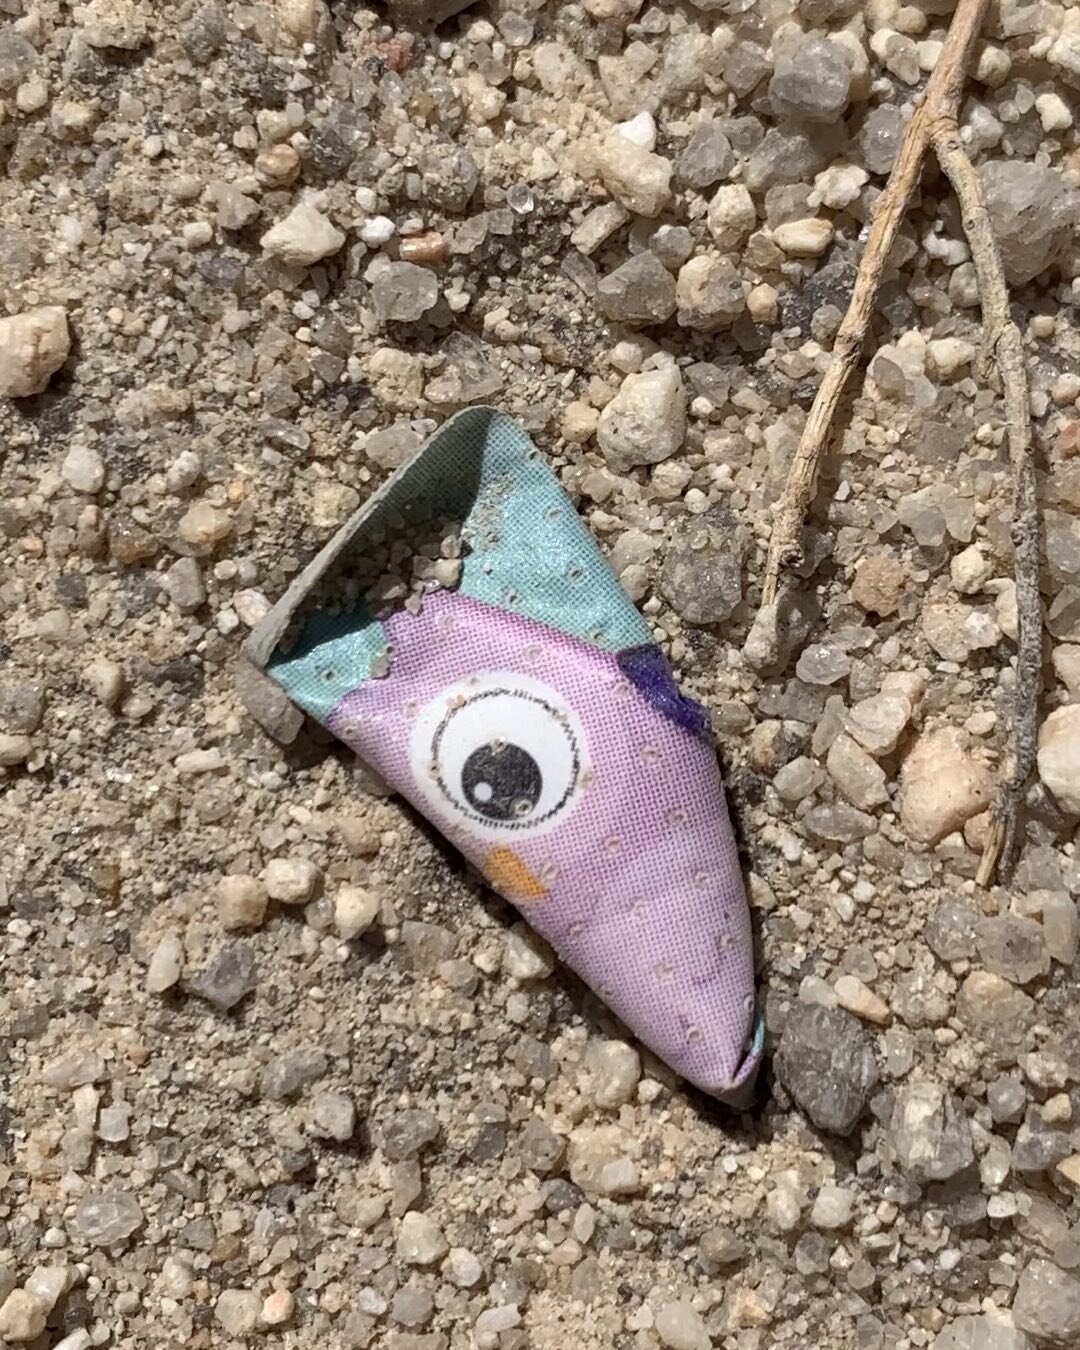 Plastic eyeball in the desert. #plasticpollution #plasticplanet #anthropocene